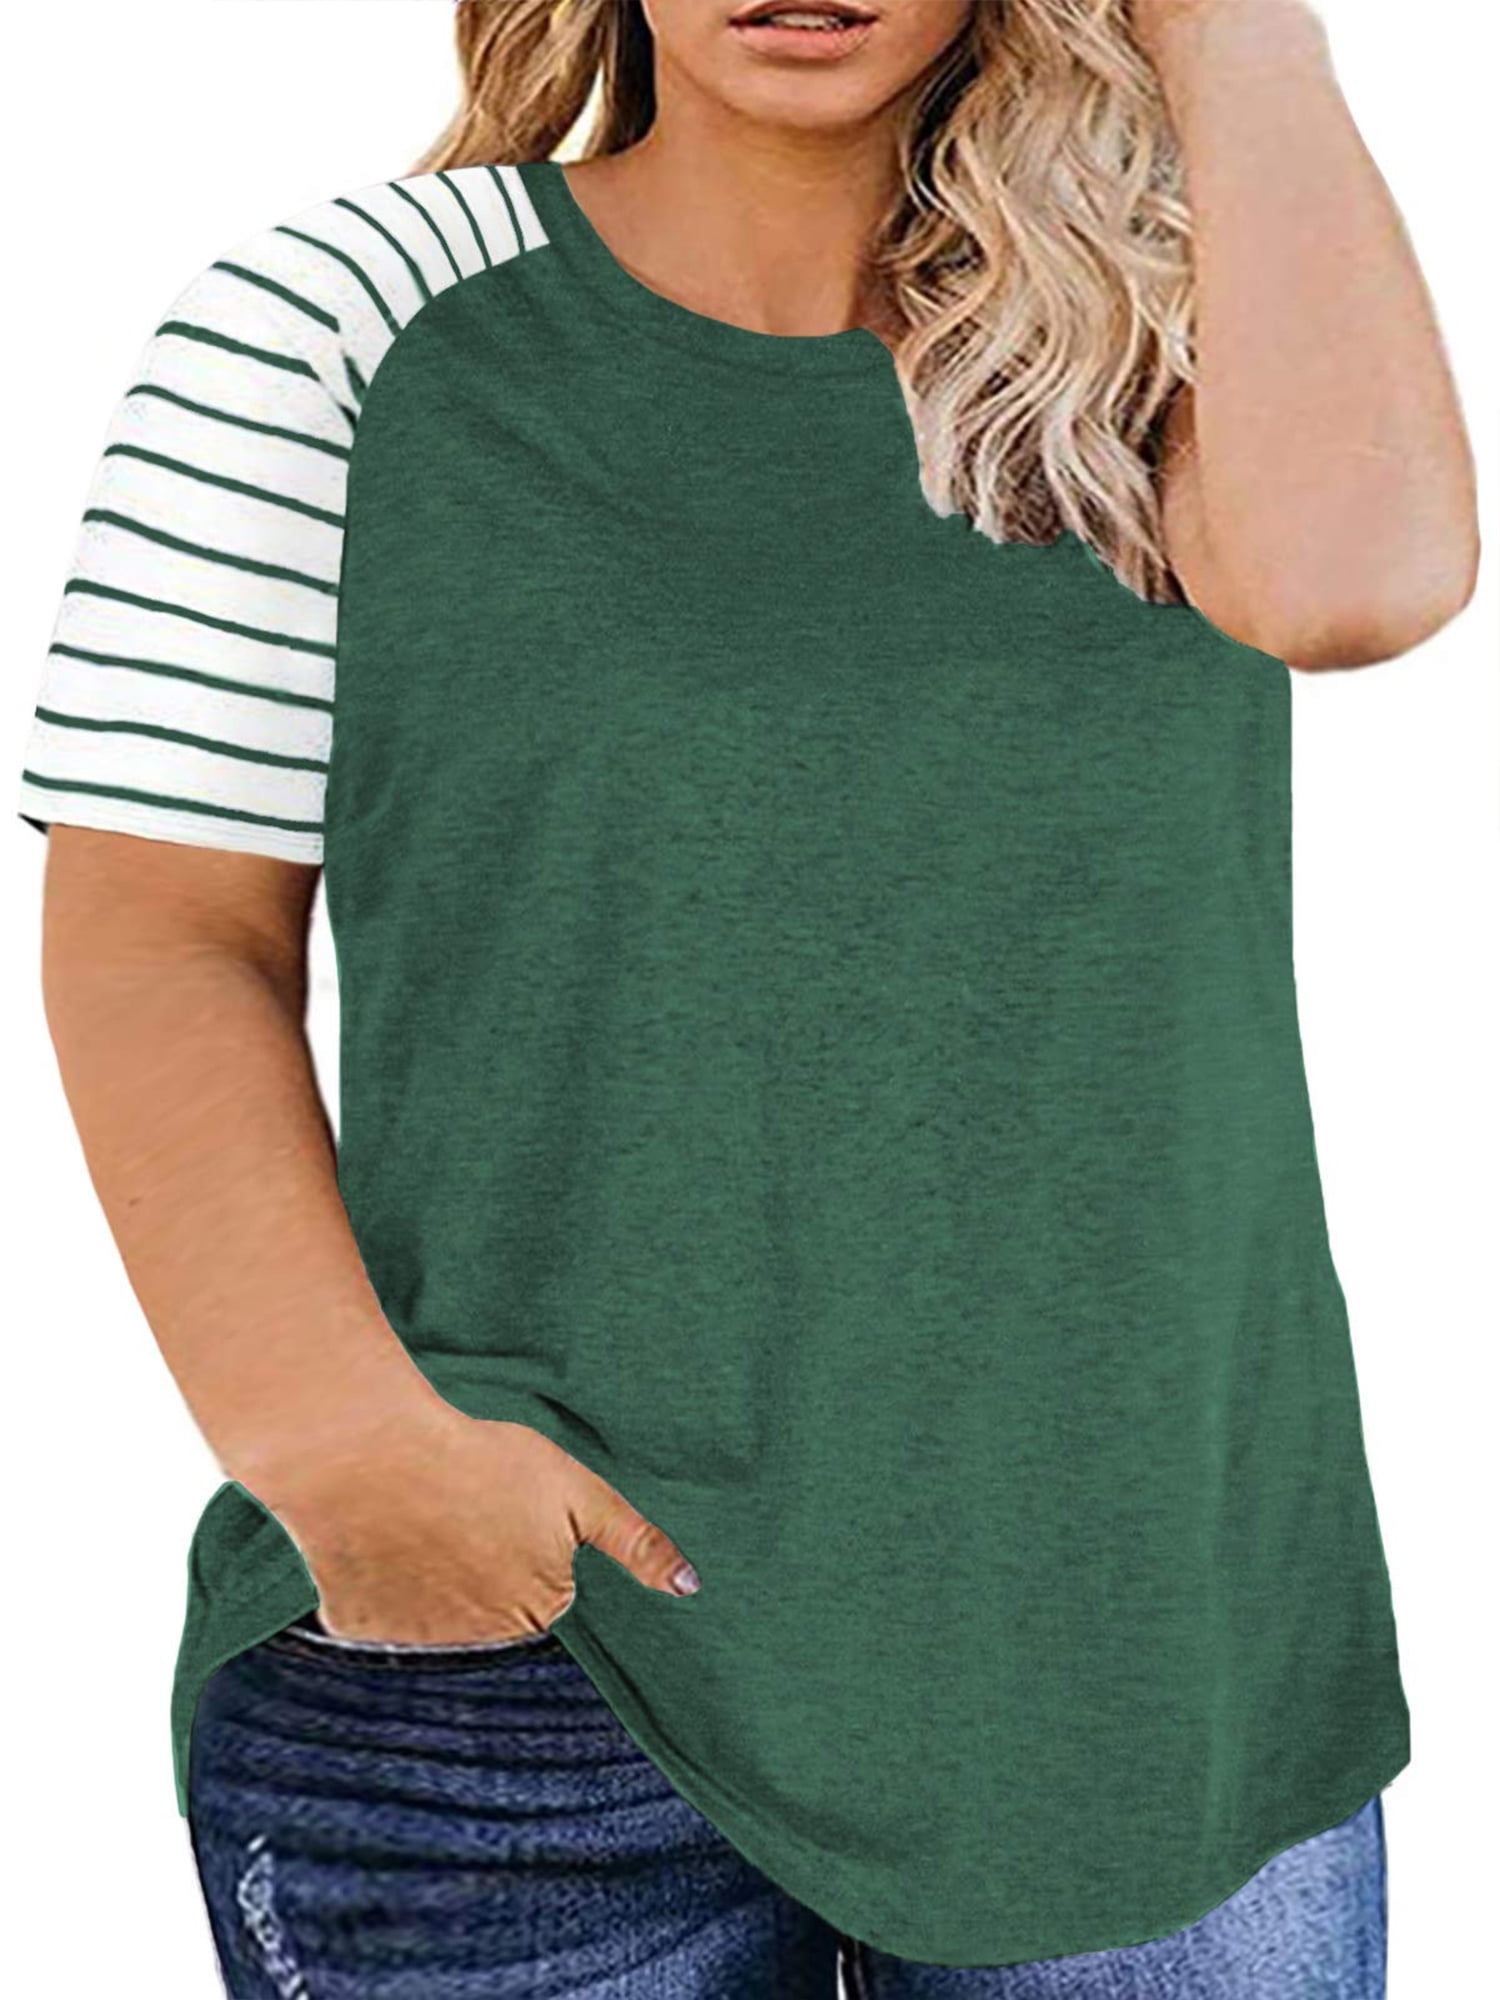 INVOLAND Womens Plus Size Tops Casual Striped Tunic Raglan Shirt Long Sleeve Baseball Blouse with Pockets 